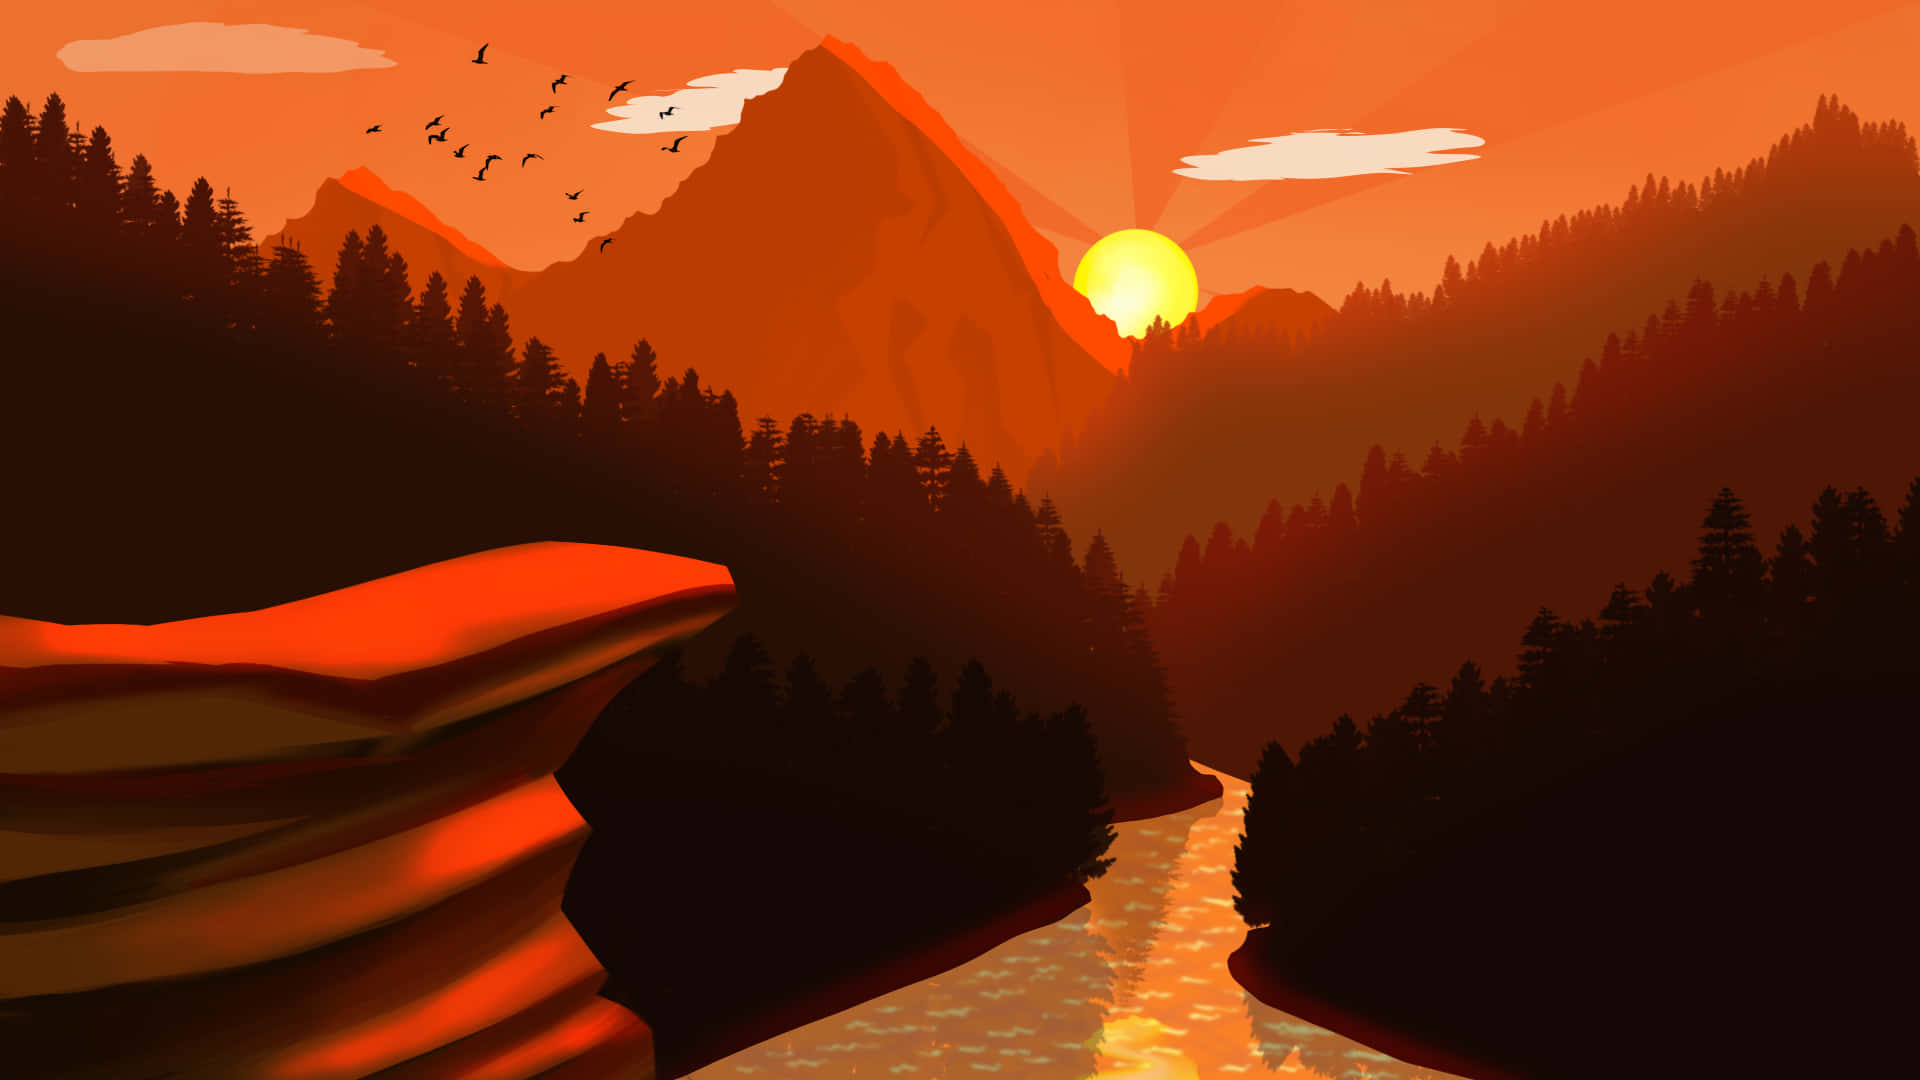 Orange River Mountains Sunset Digital Art Wallpaper